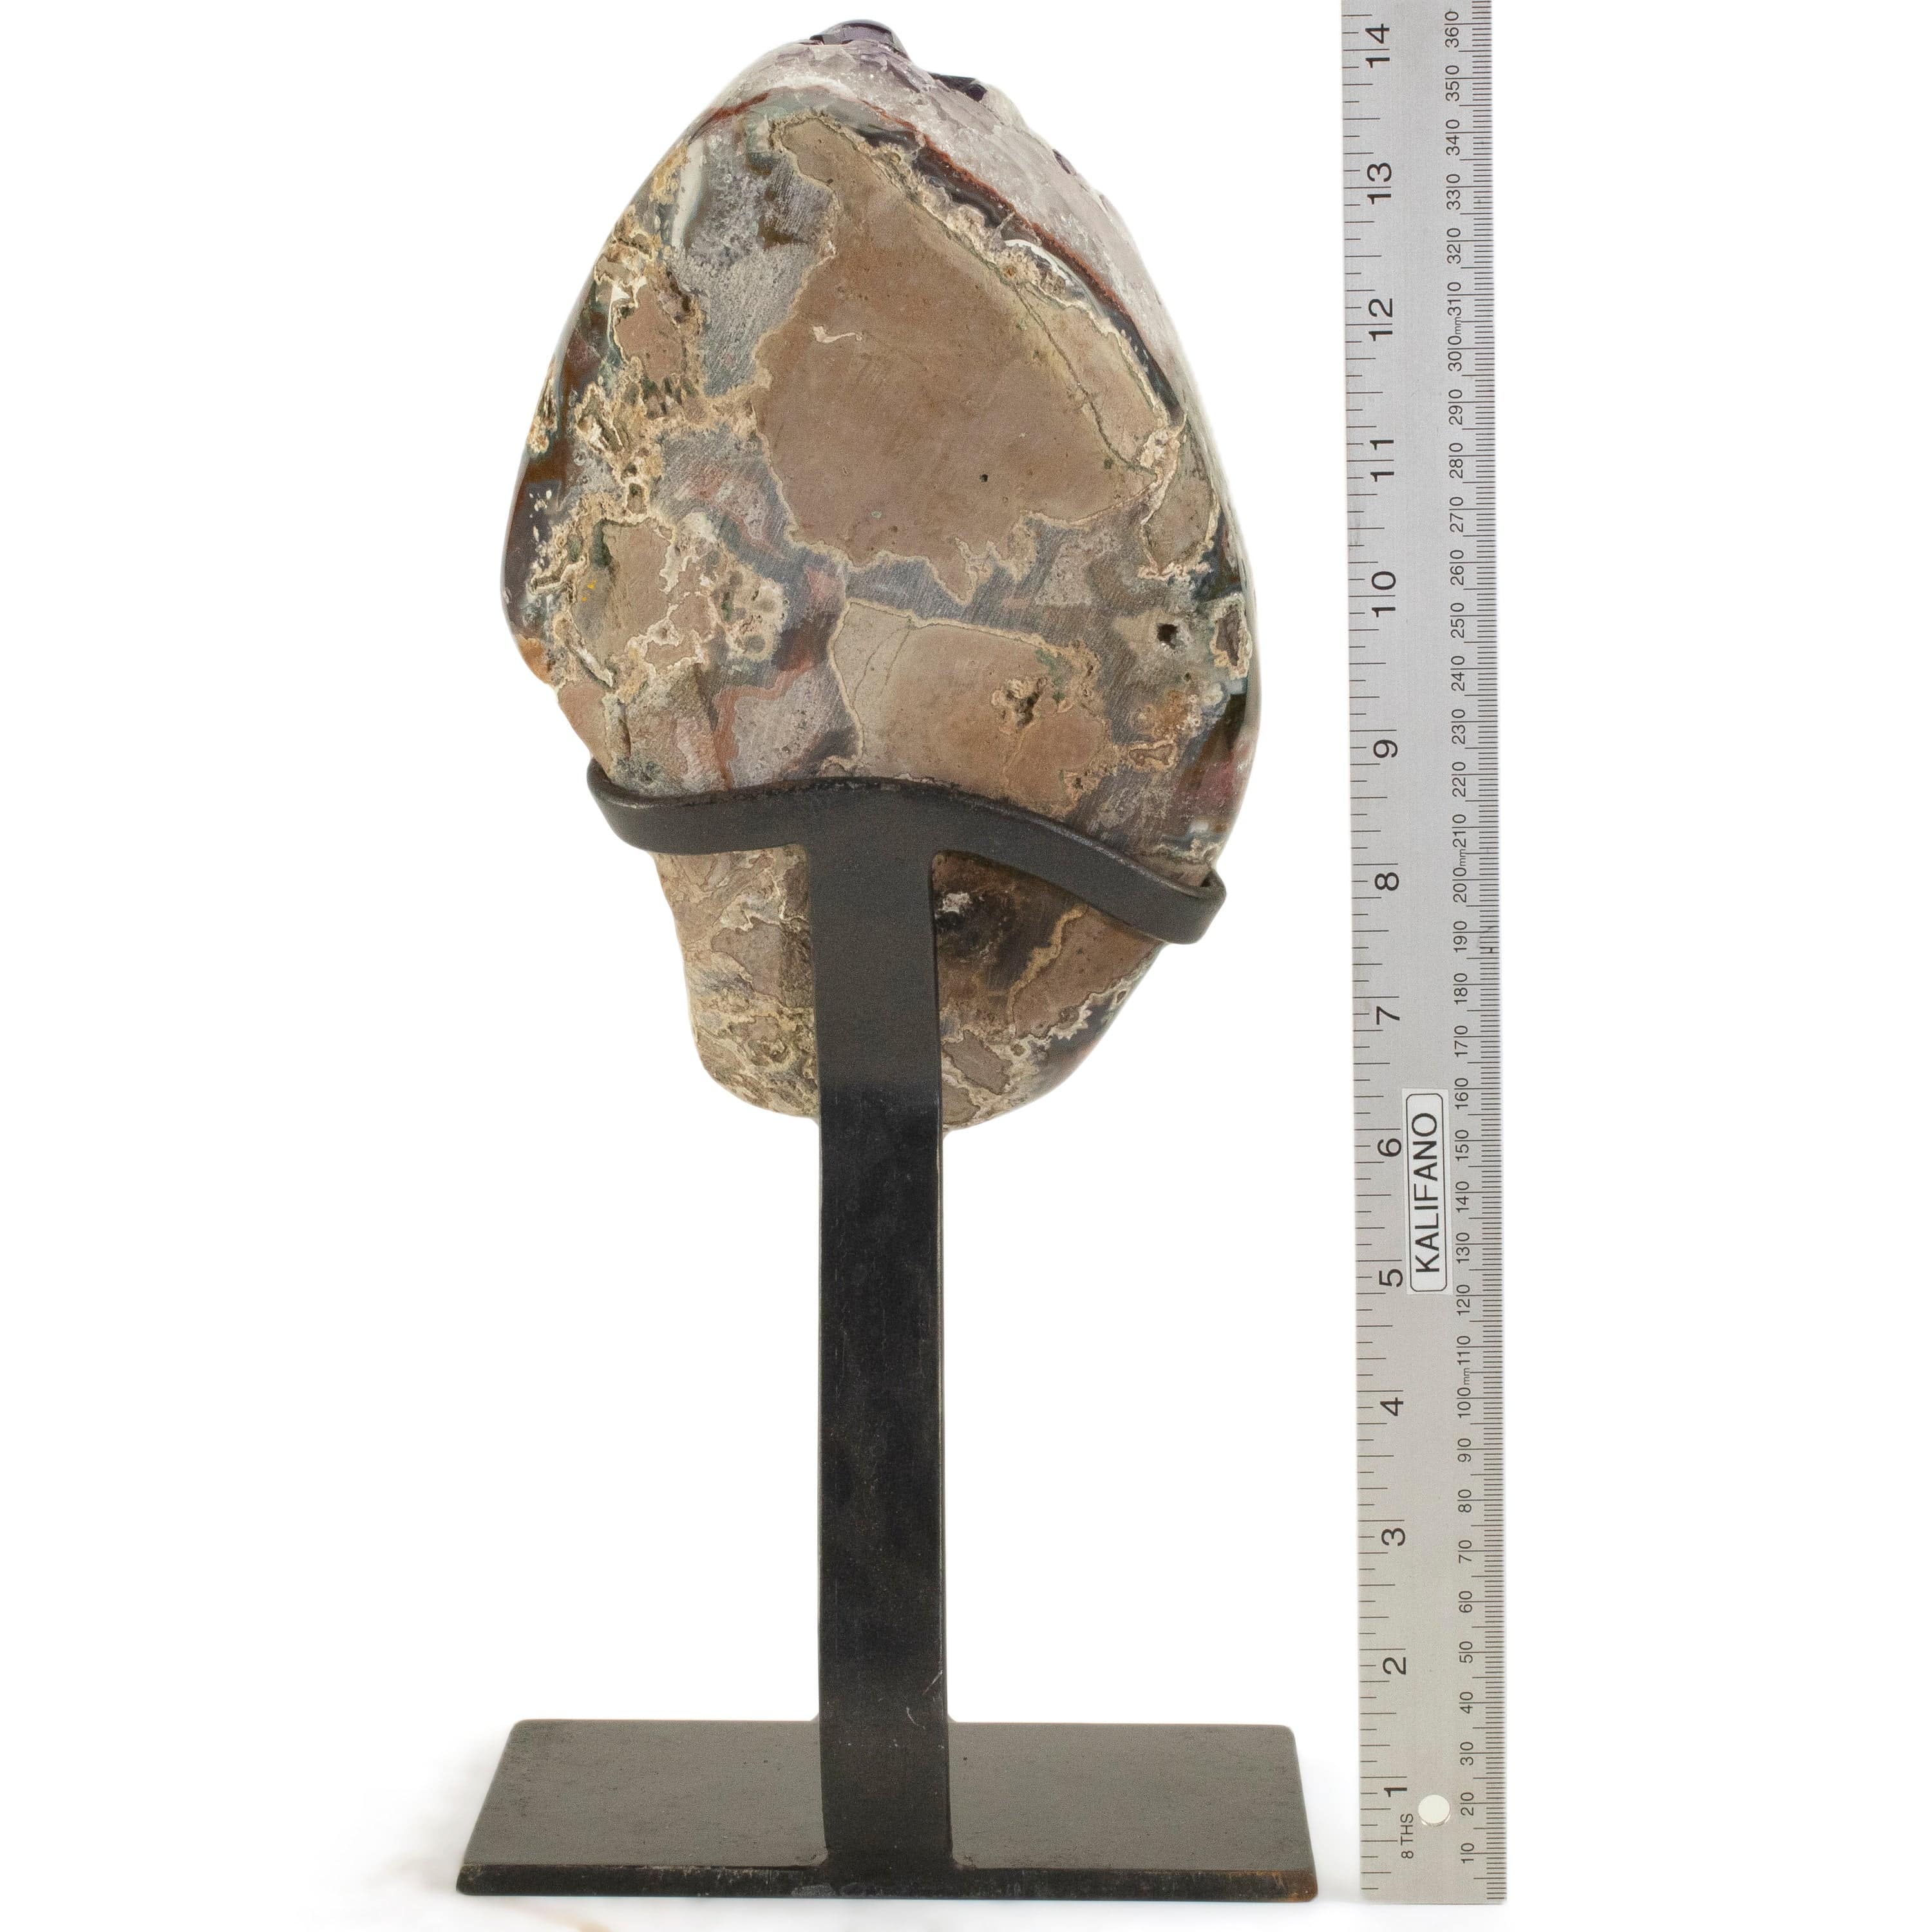 Kalifano Amethyst Uruguayan Amethyst Geode on Custom Stand - 10.6 lbs / 14 in. UAG4800.018